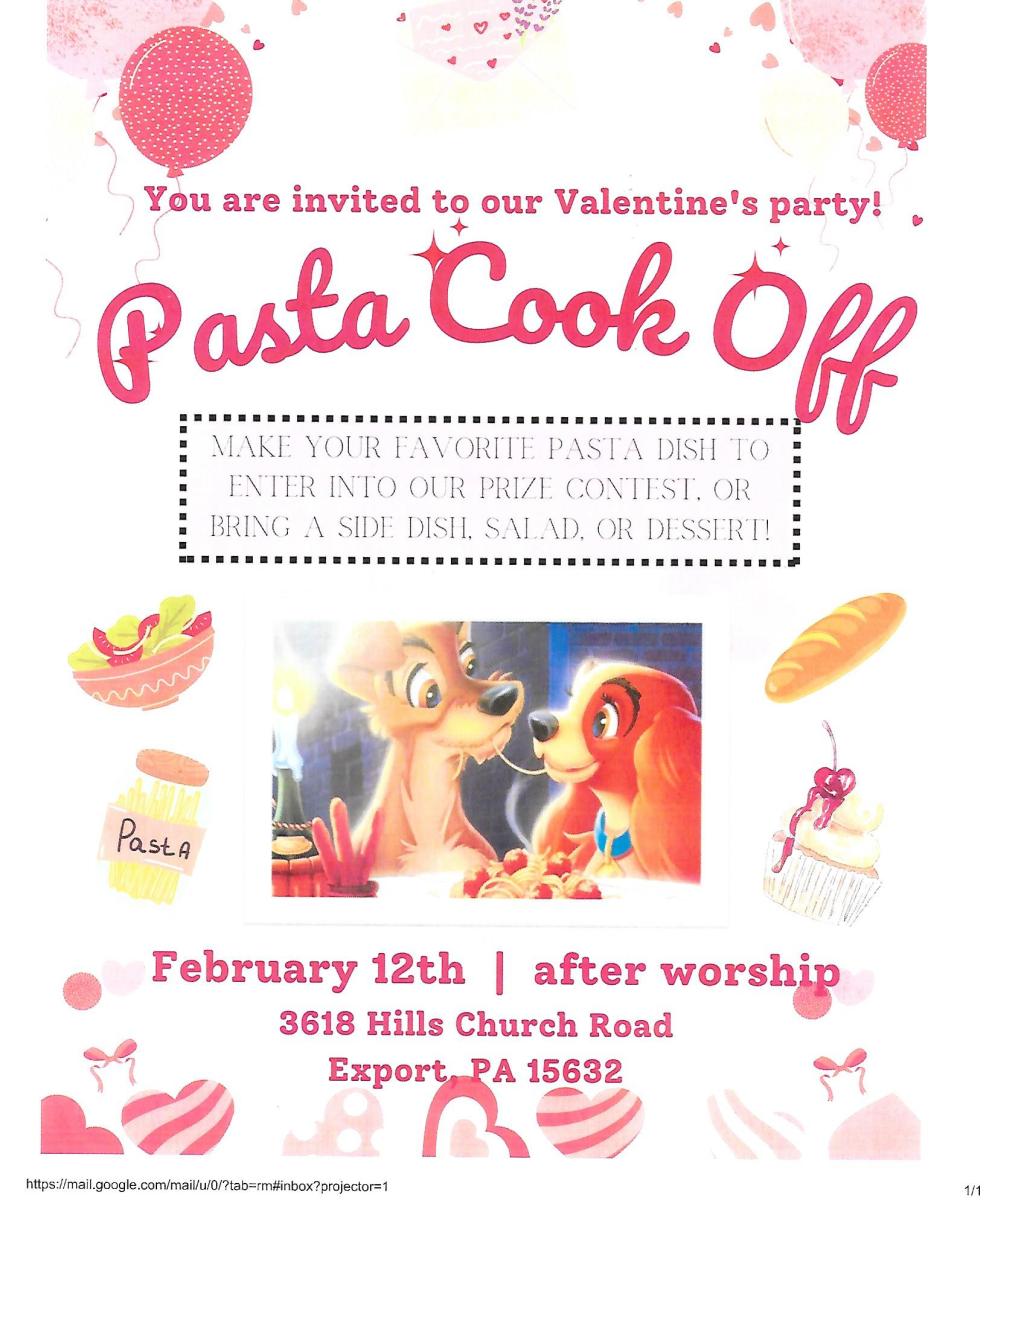 “Valentine’s Party & Pasta Cook Off”